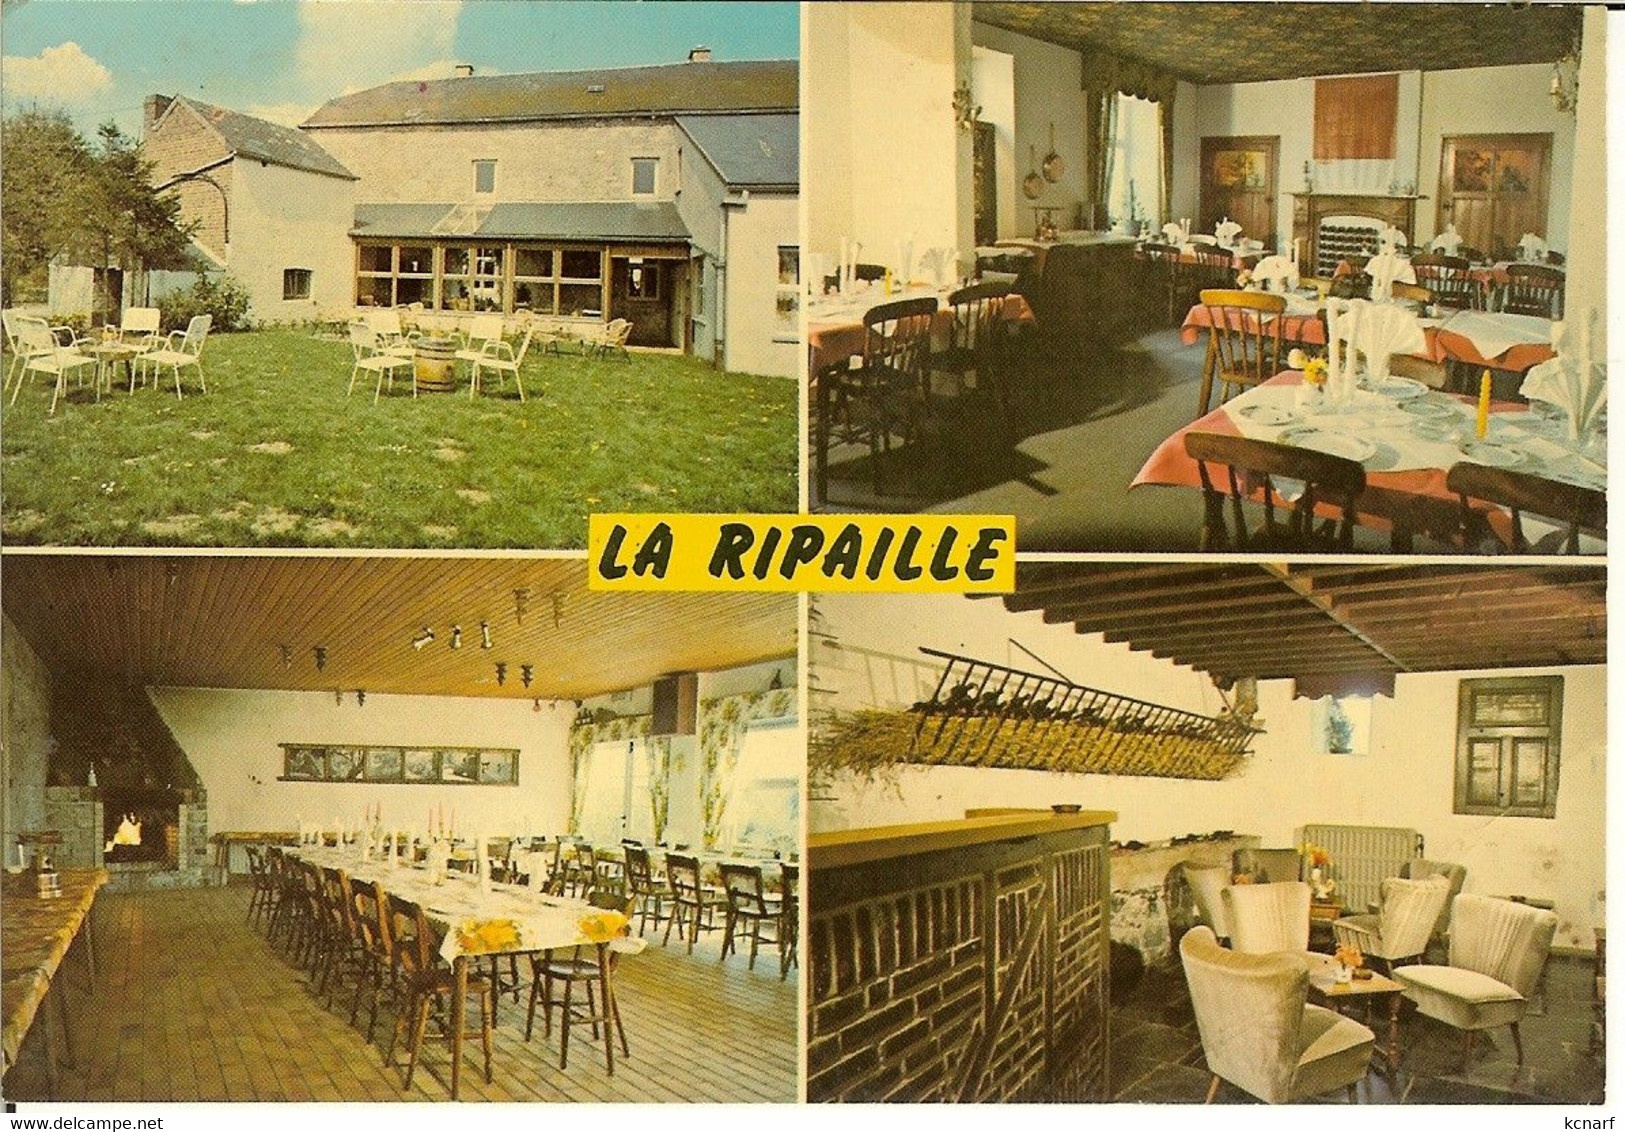 CP De VERLEE ( Havelange ) " Restaurant LA RIPAILLE " - Havelange